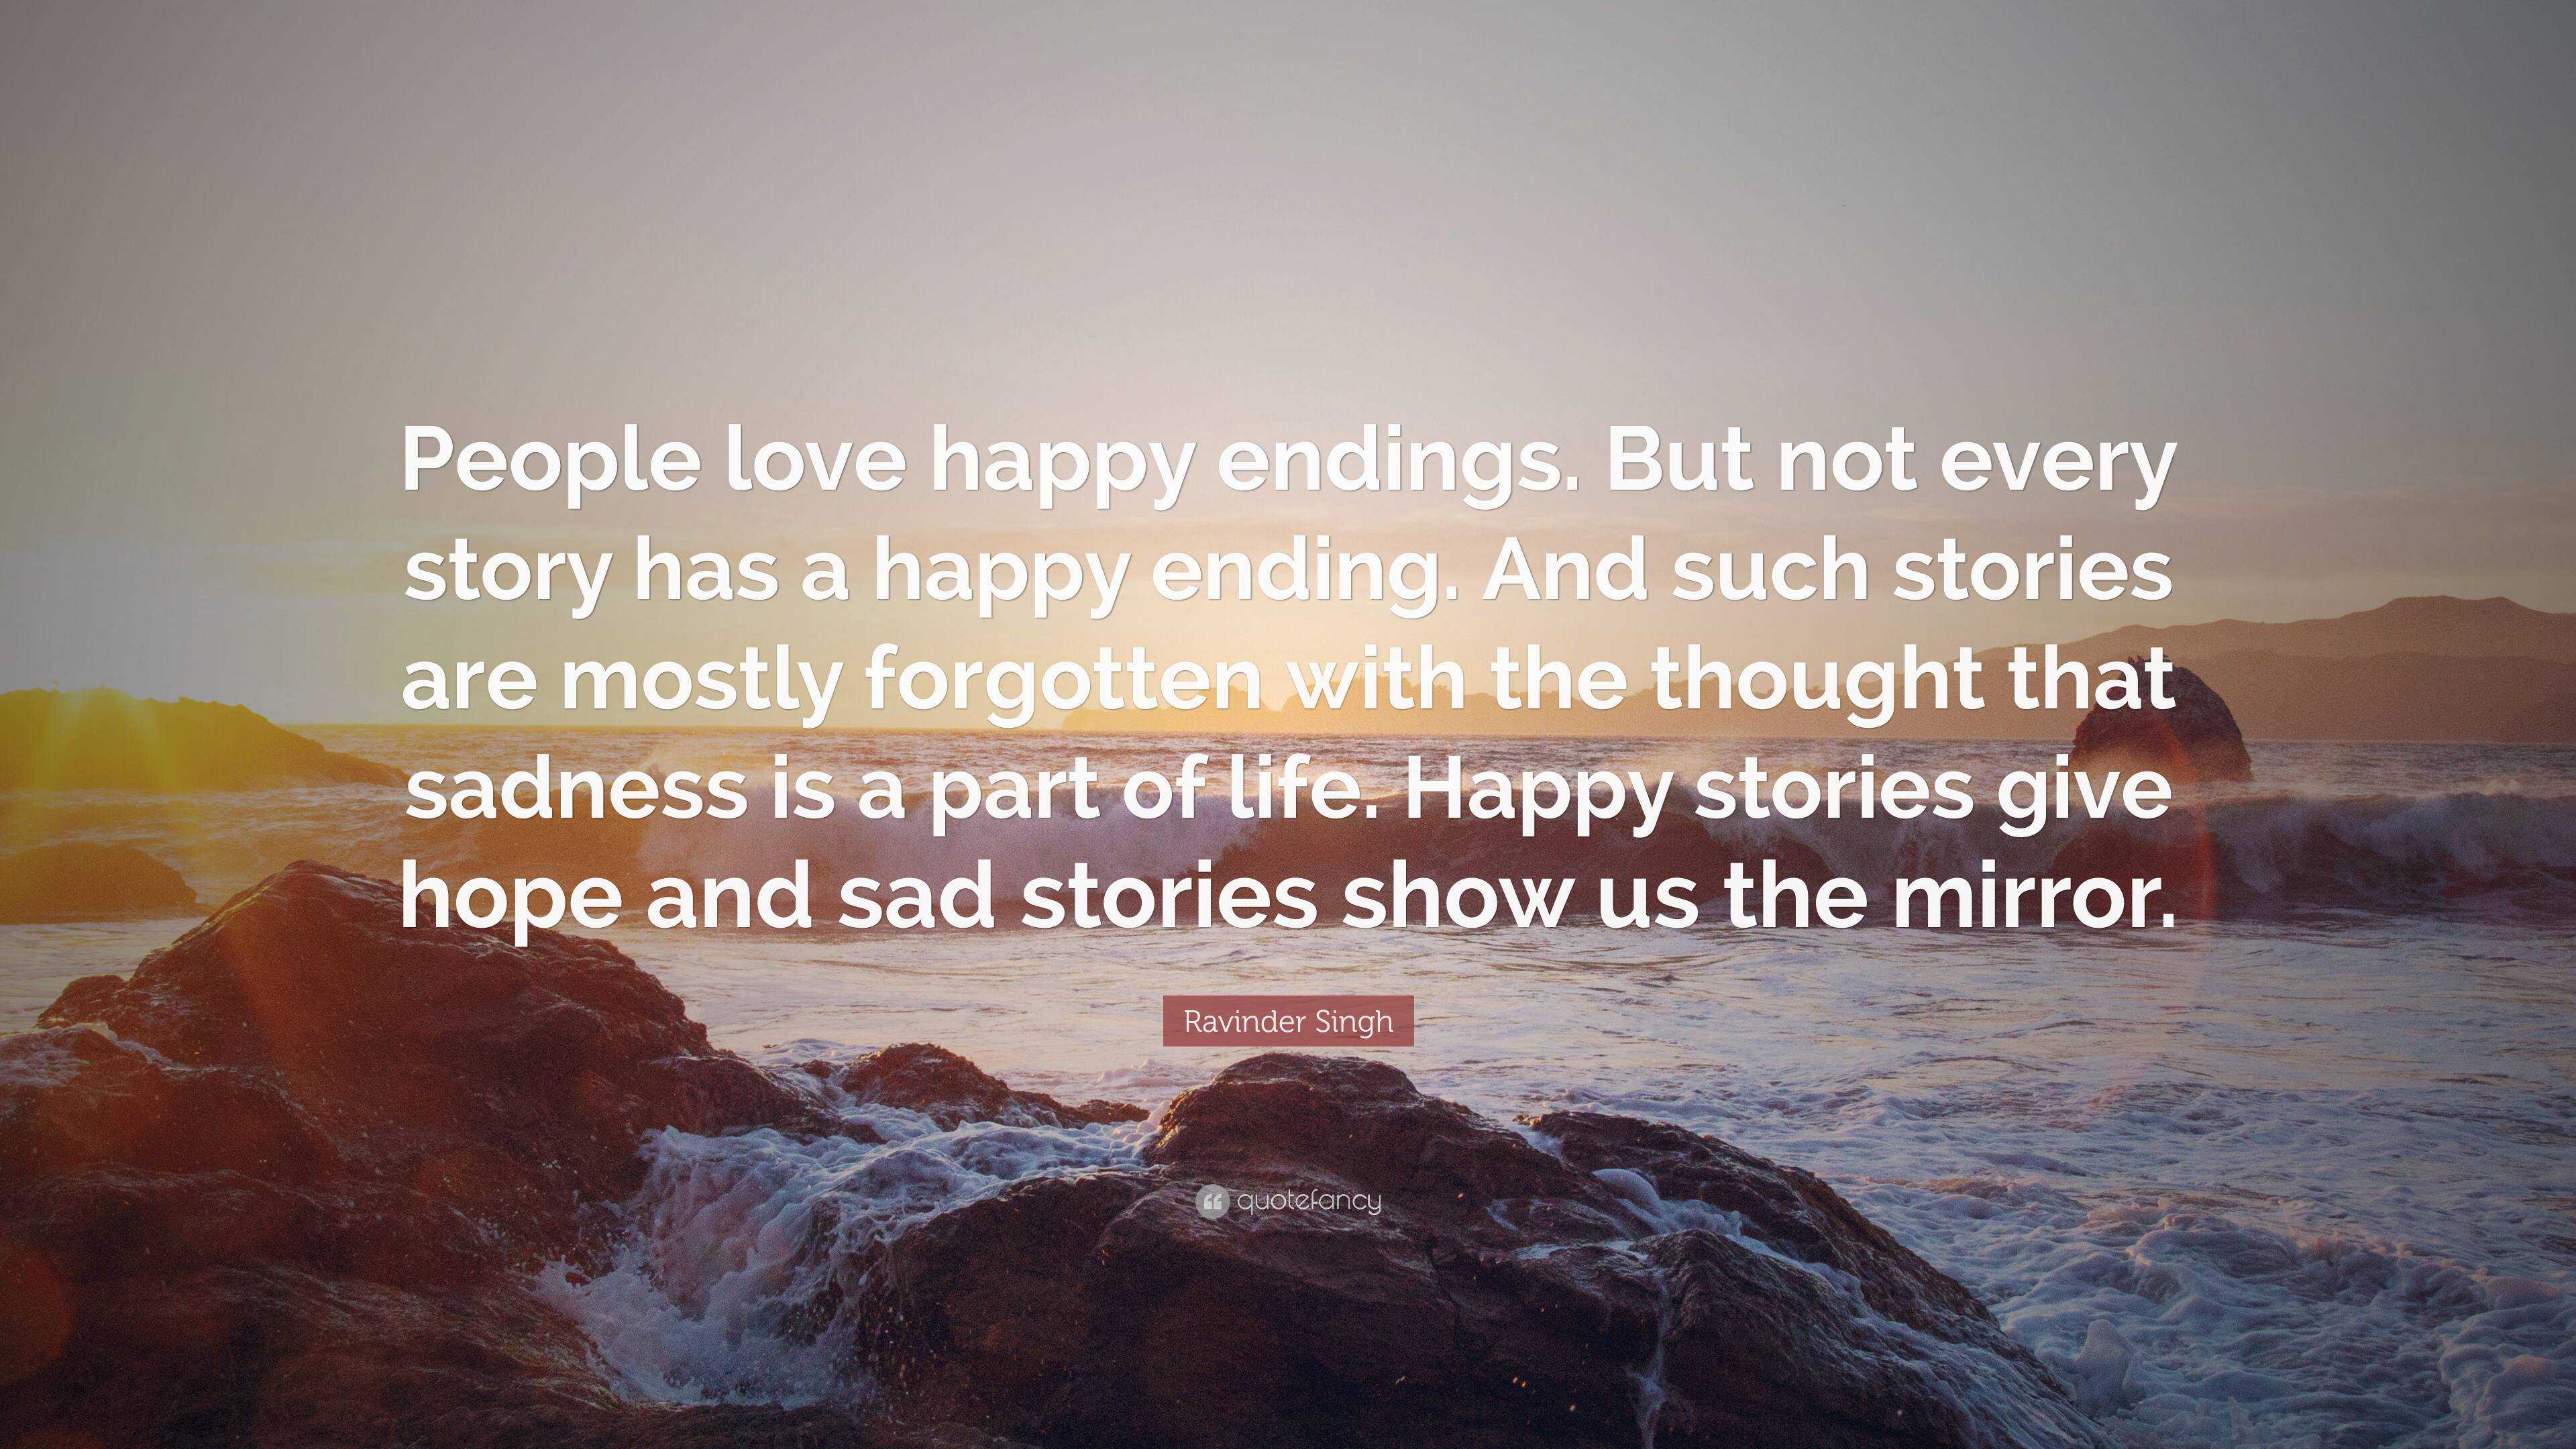 Love happy to endings got The Secret